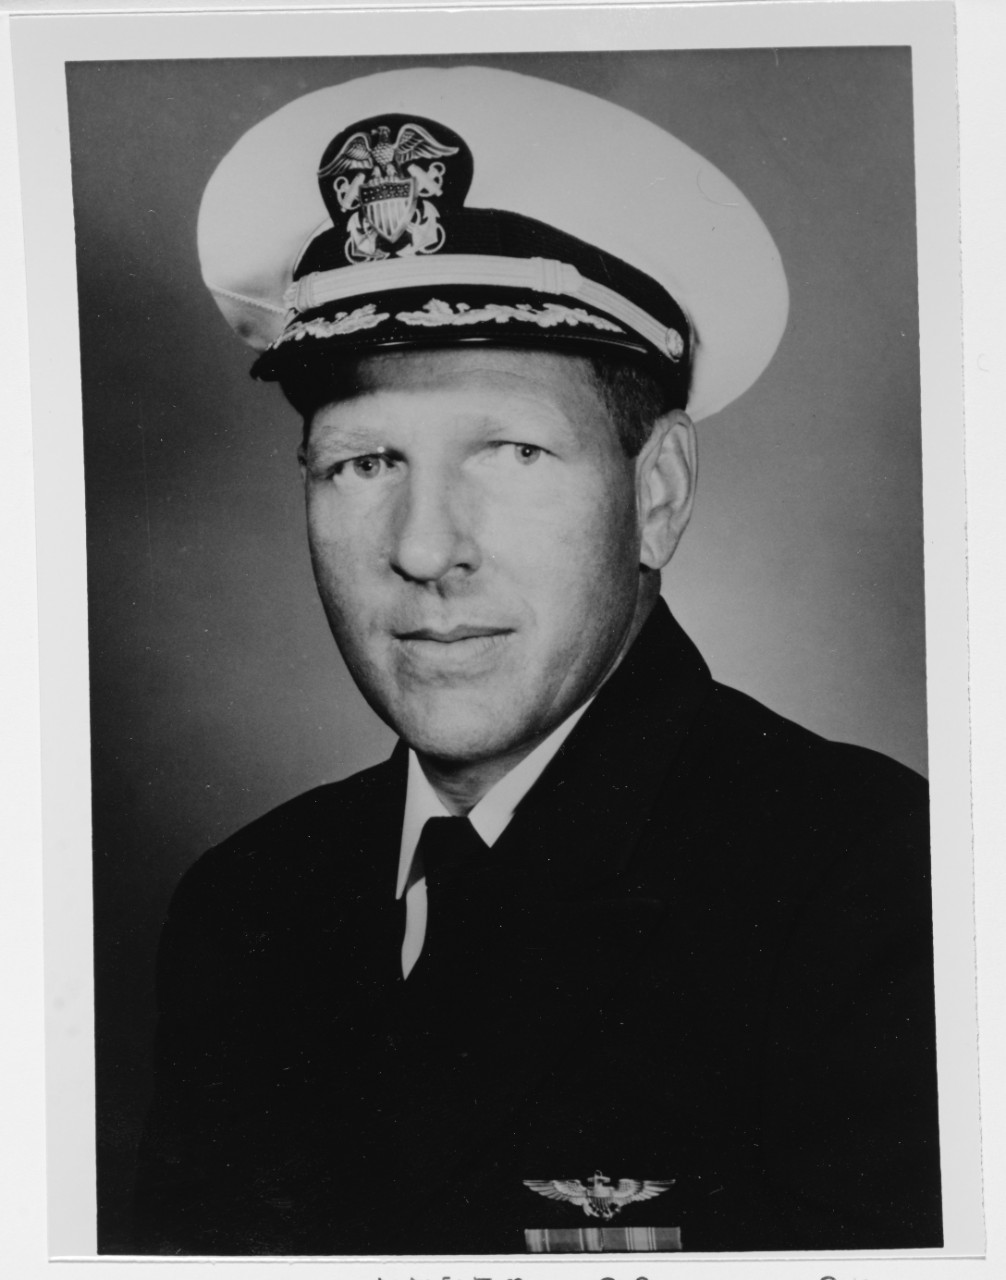 Commander Paul L. Milius, USN (1928-1968). Awarded posthumous Navy Cross for extraordinary heroism.